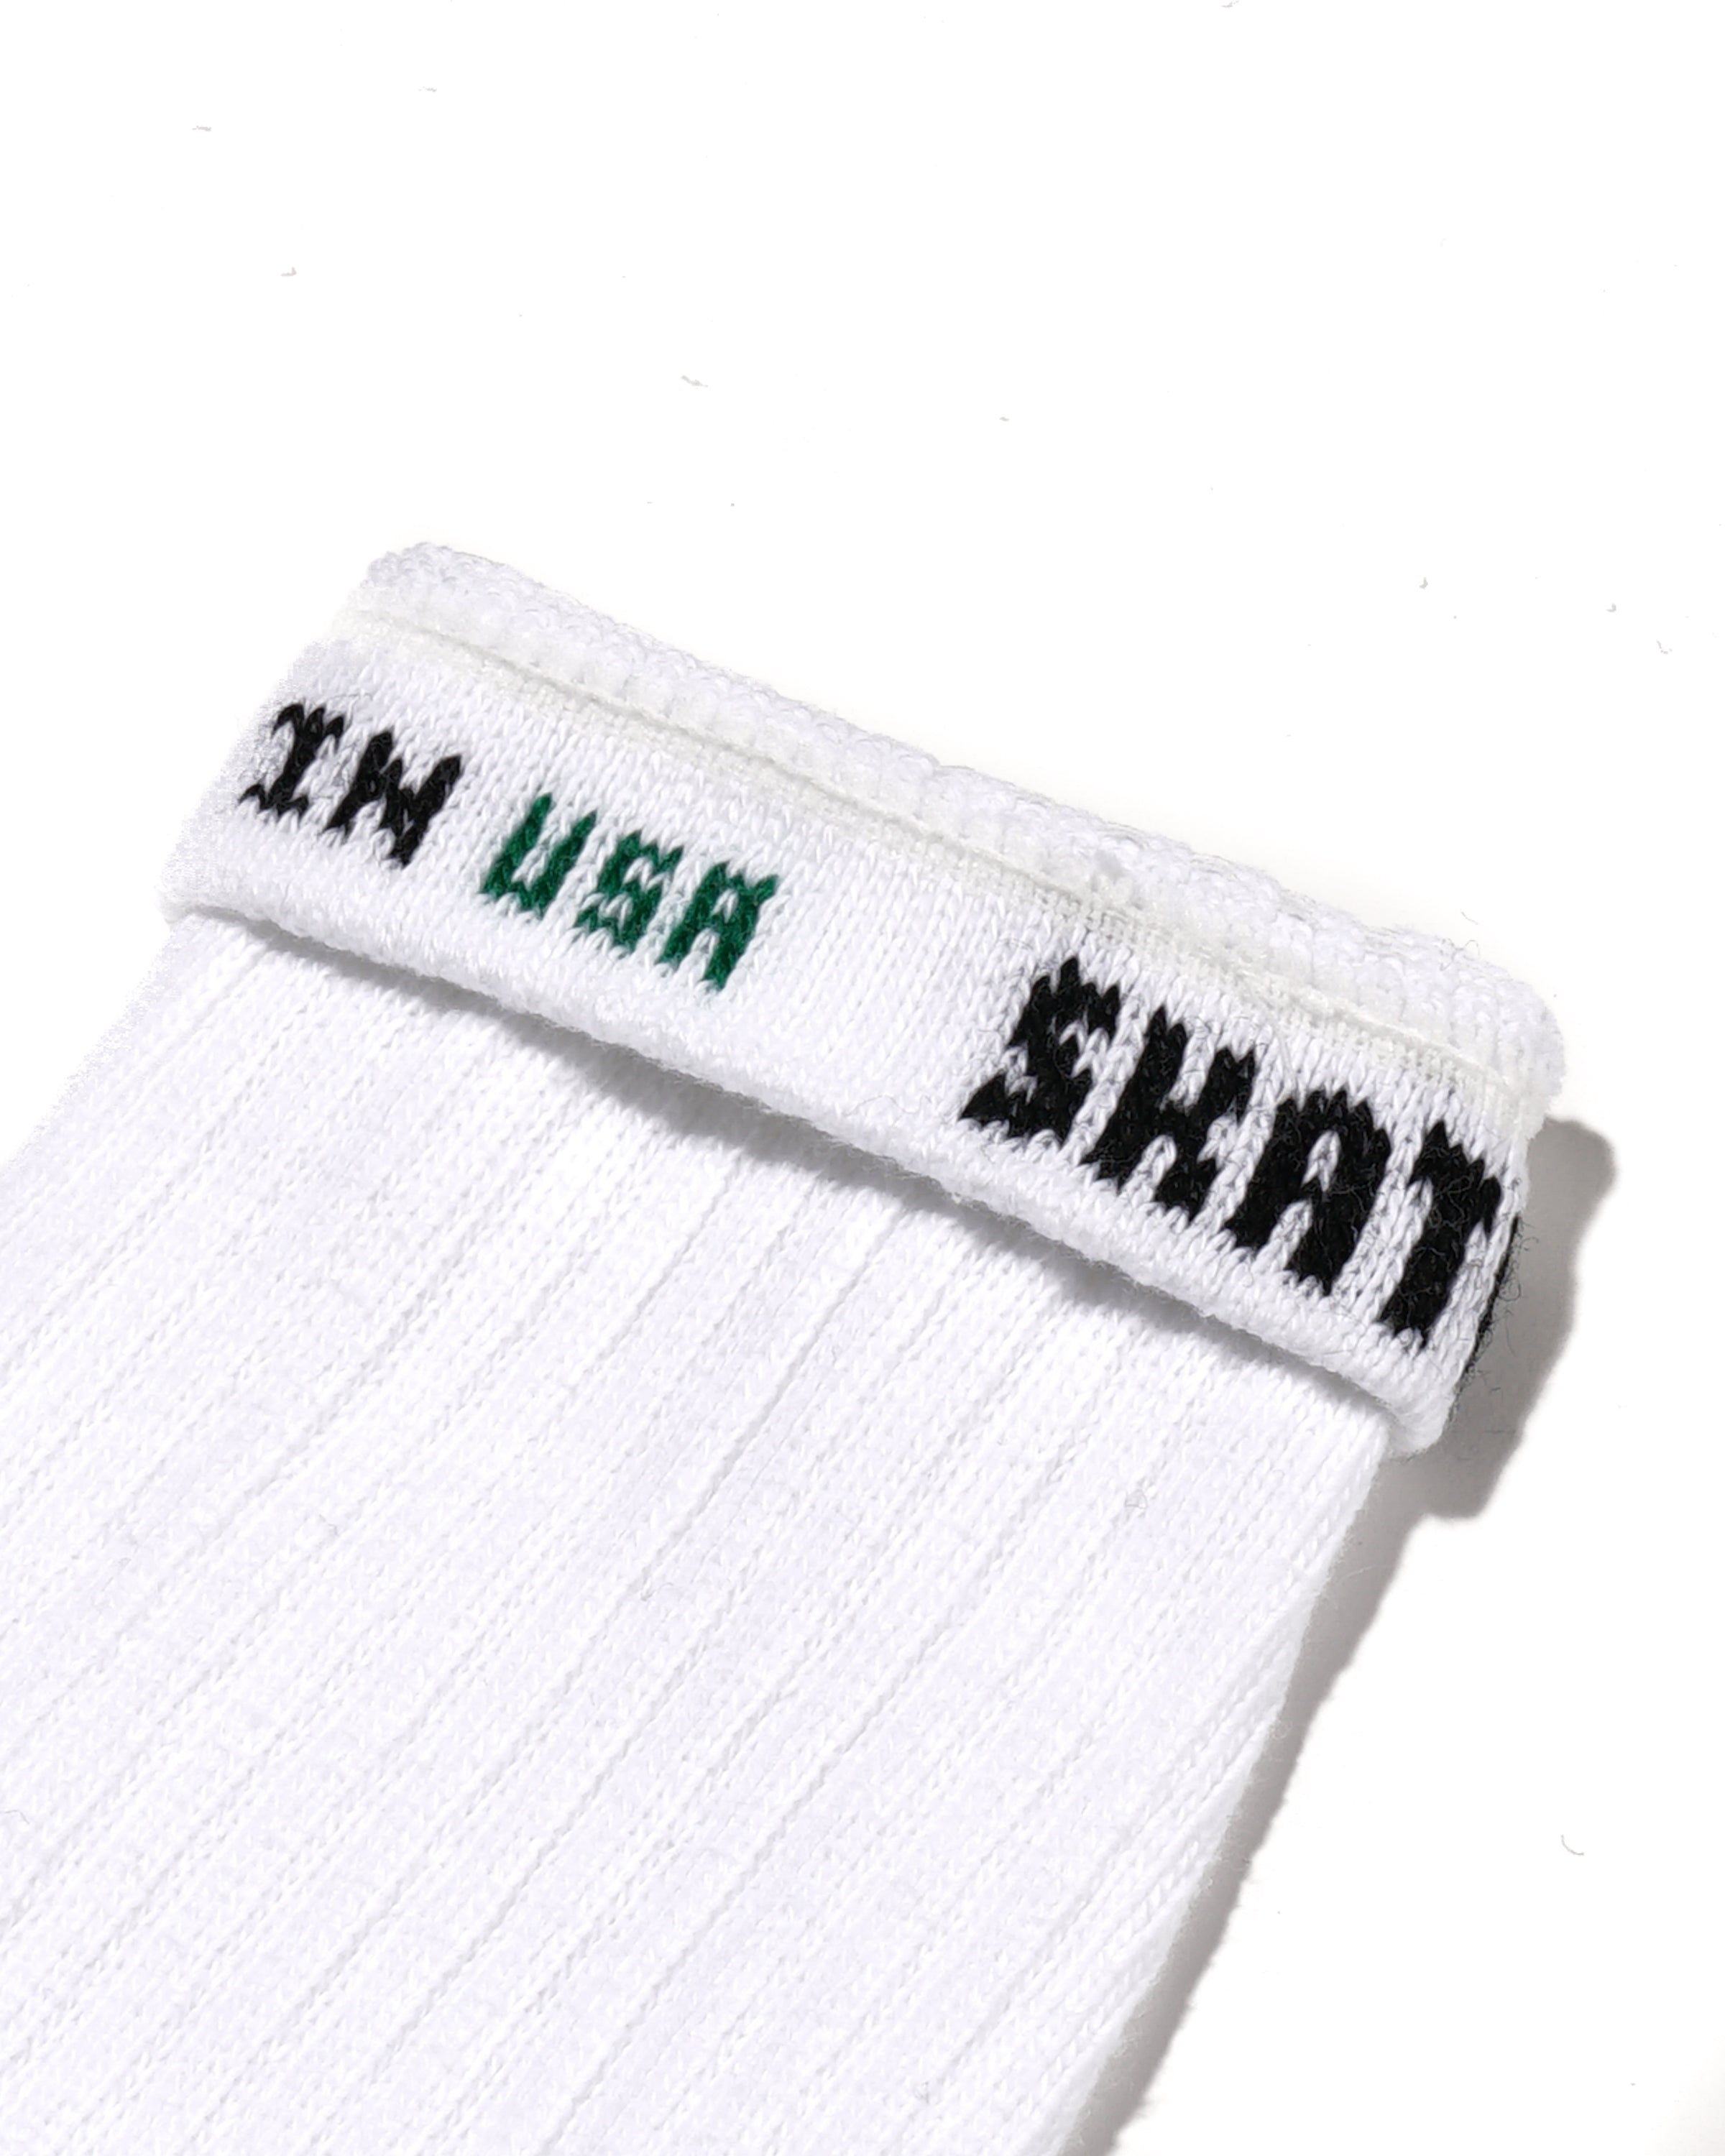 14 Inch Kids Socks - White